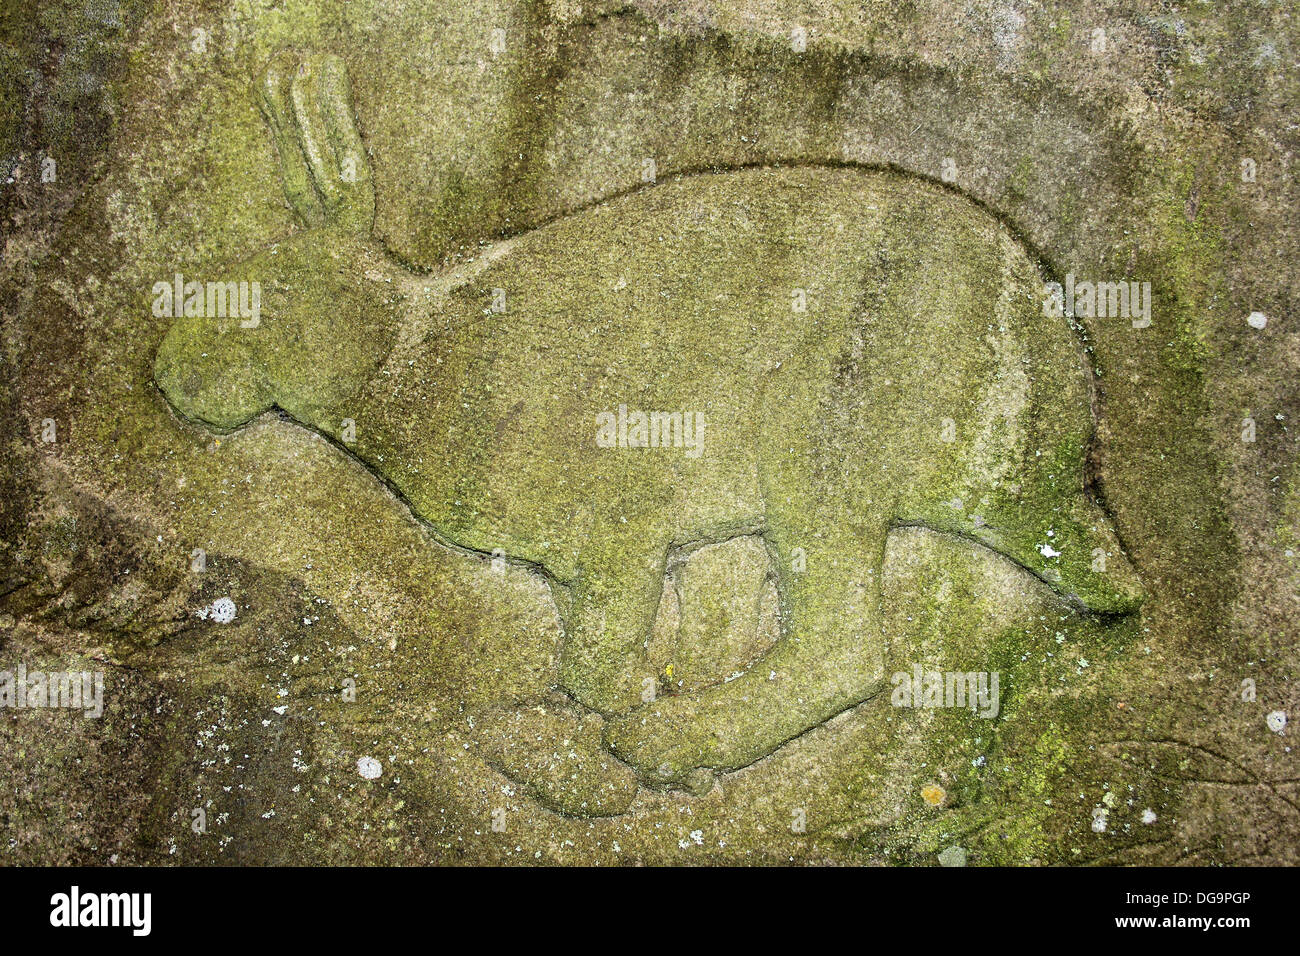 Stone Carving eines Kaninchens Stockfoto